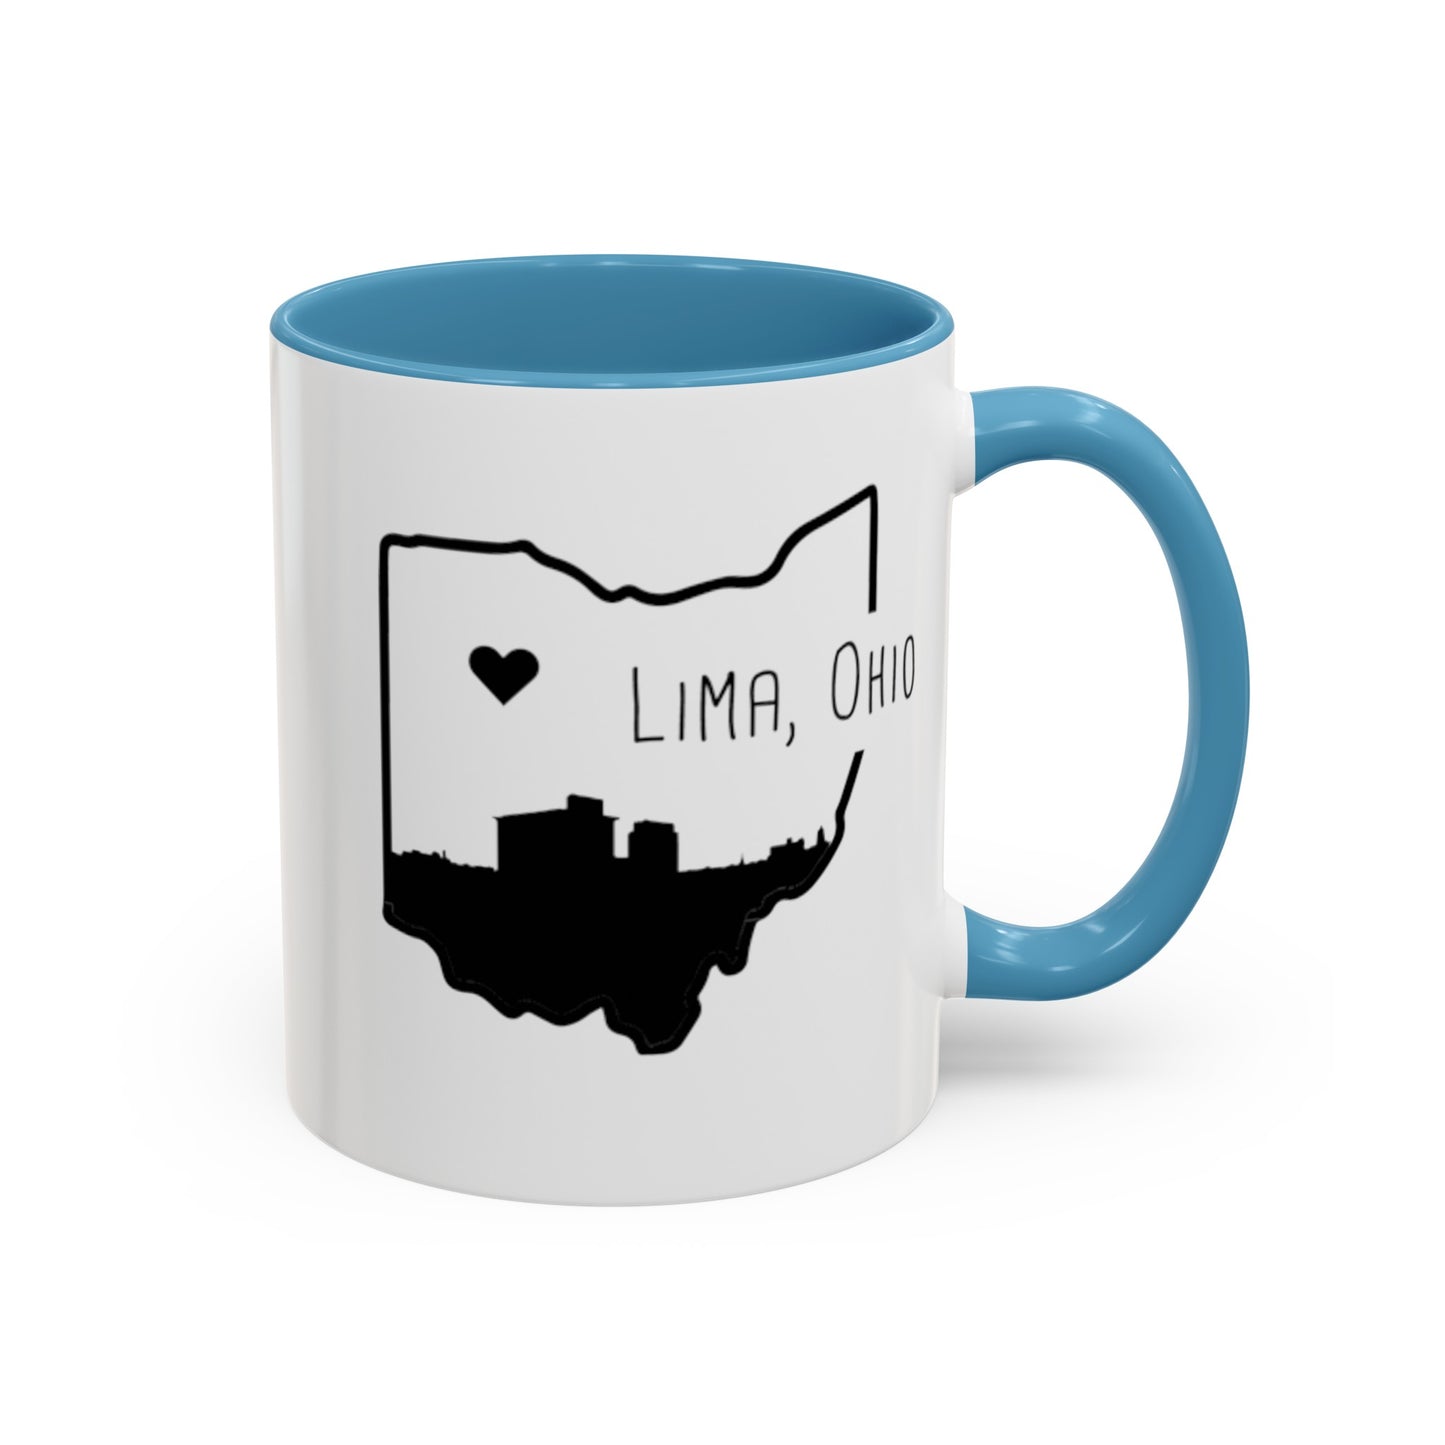 Lima, Ohio Ceramic Mug